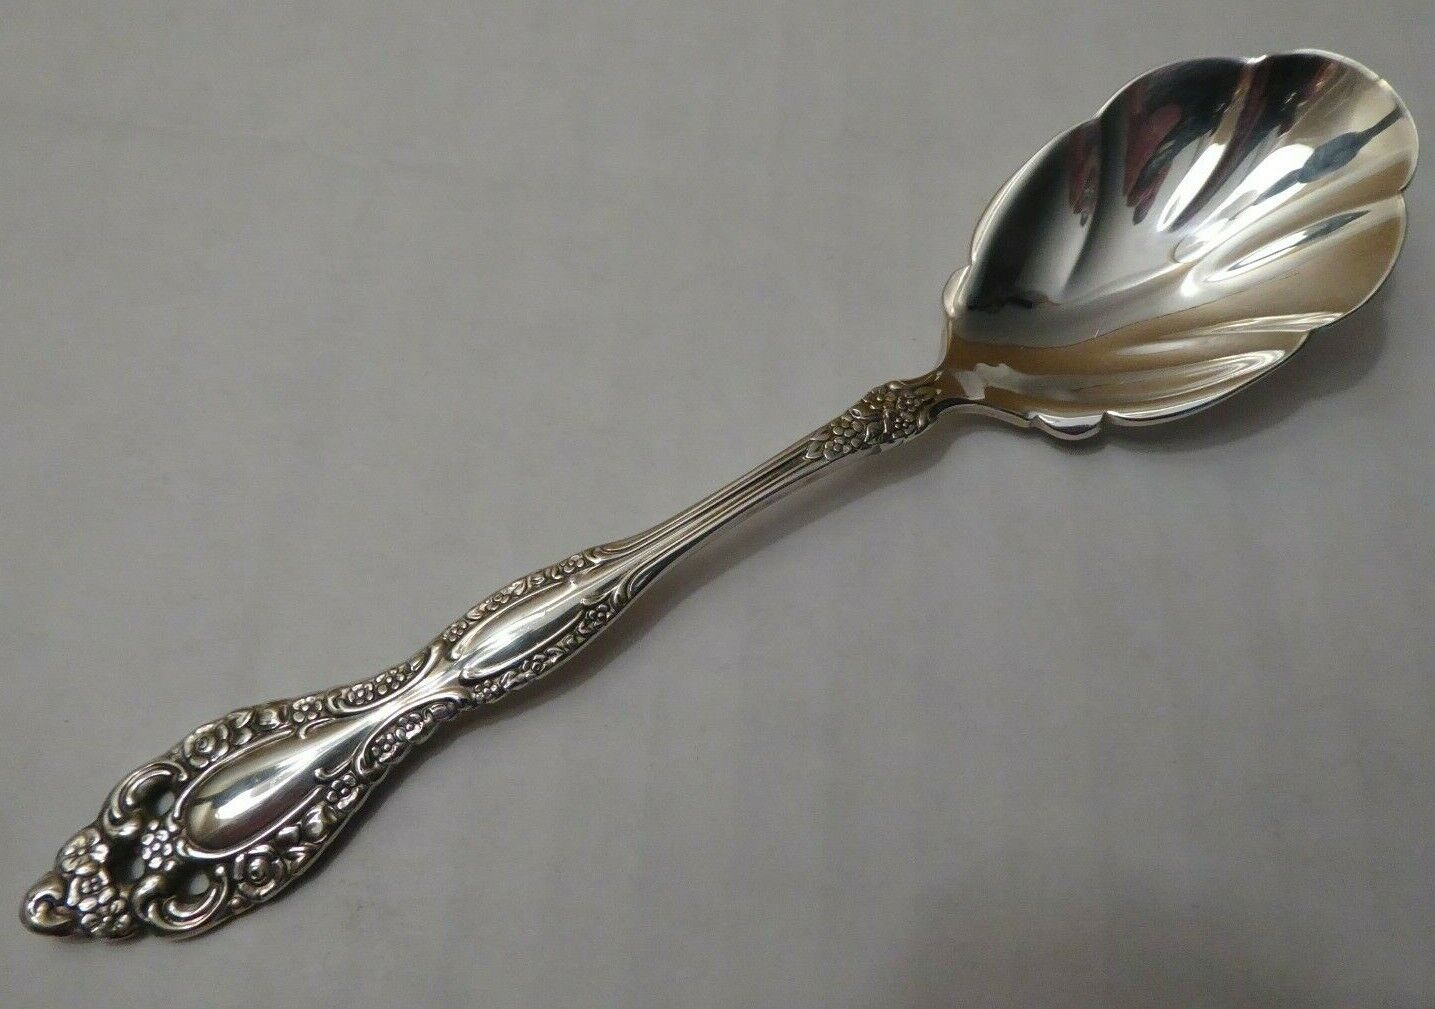 1881 Rogers Oneida Ltd Victorian Classic Sugar Shell Spoon 6 inch Vintage